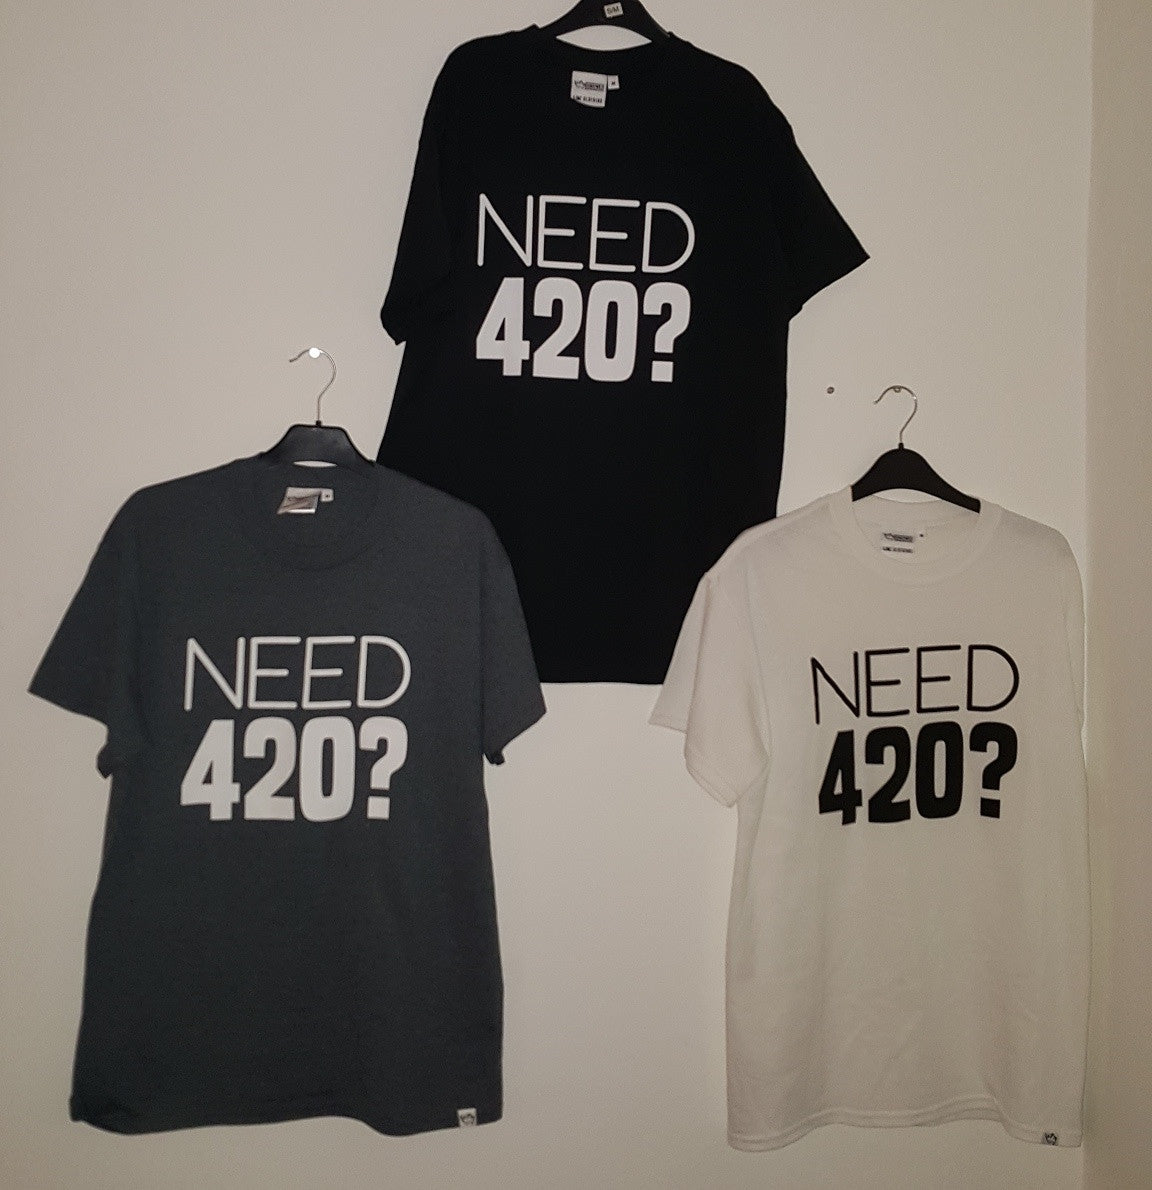 Need 420? Tshirt - white rhino uk clothing